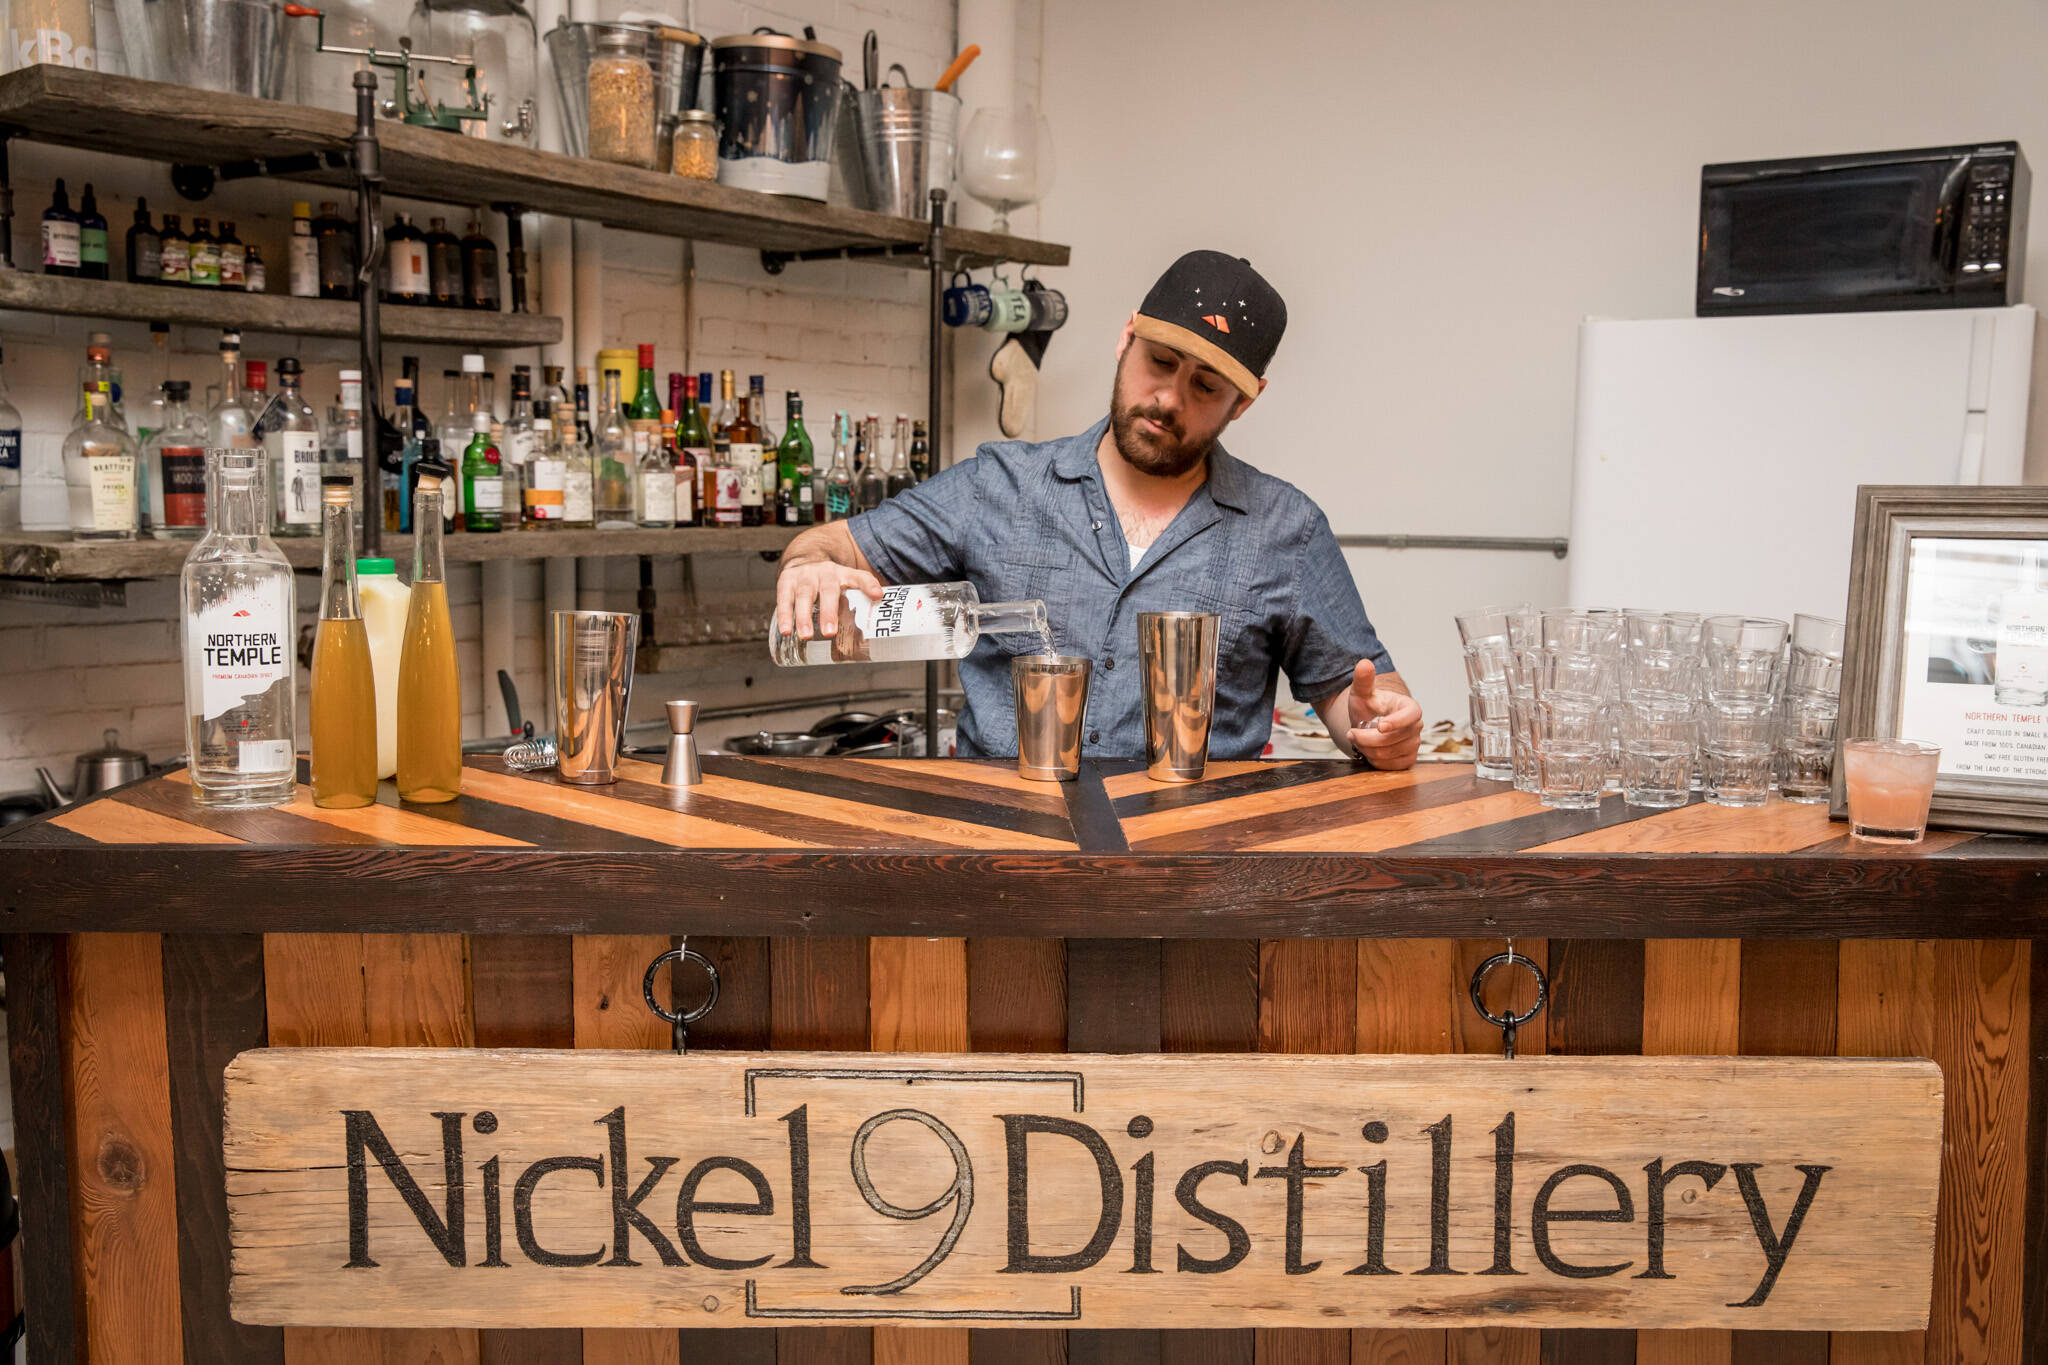 Nickel 9 Distillery